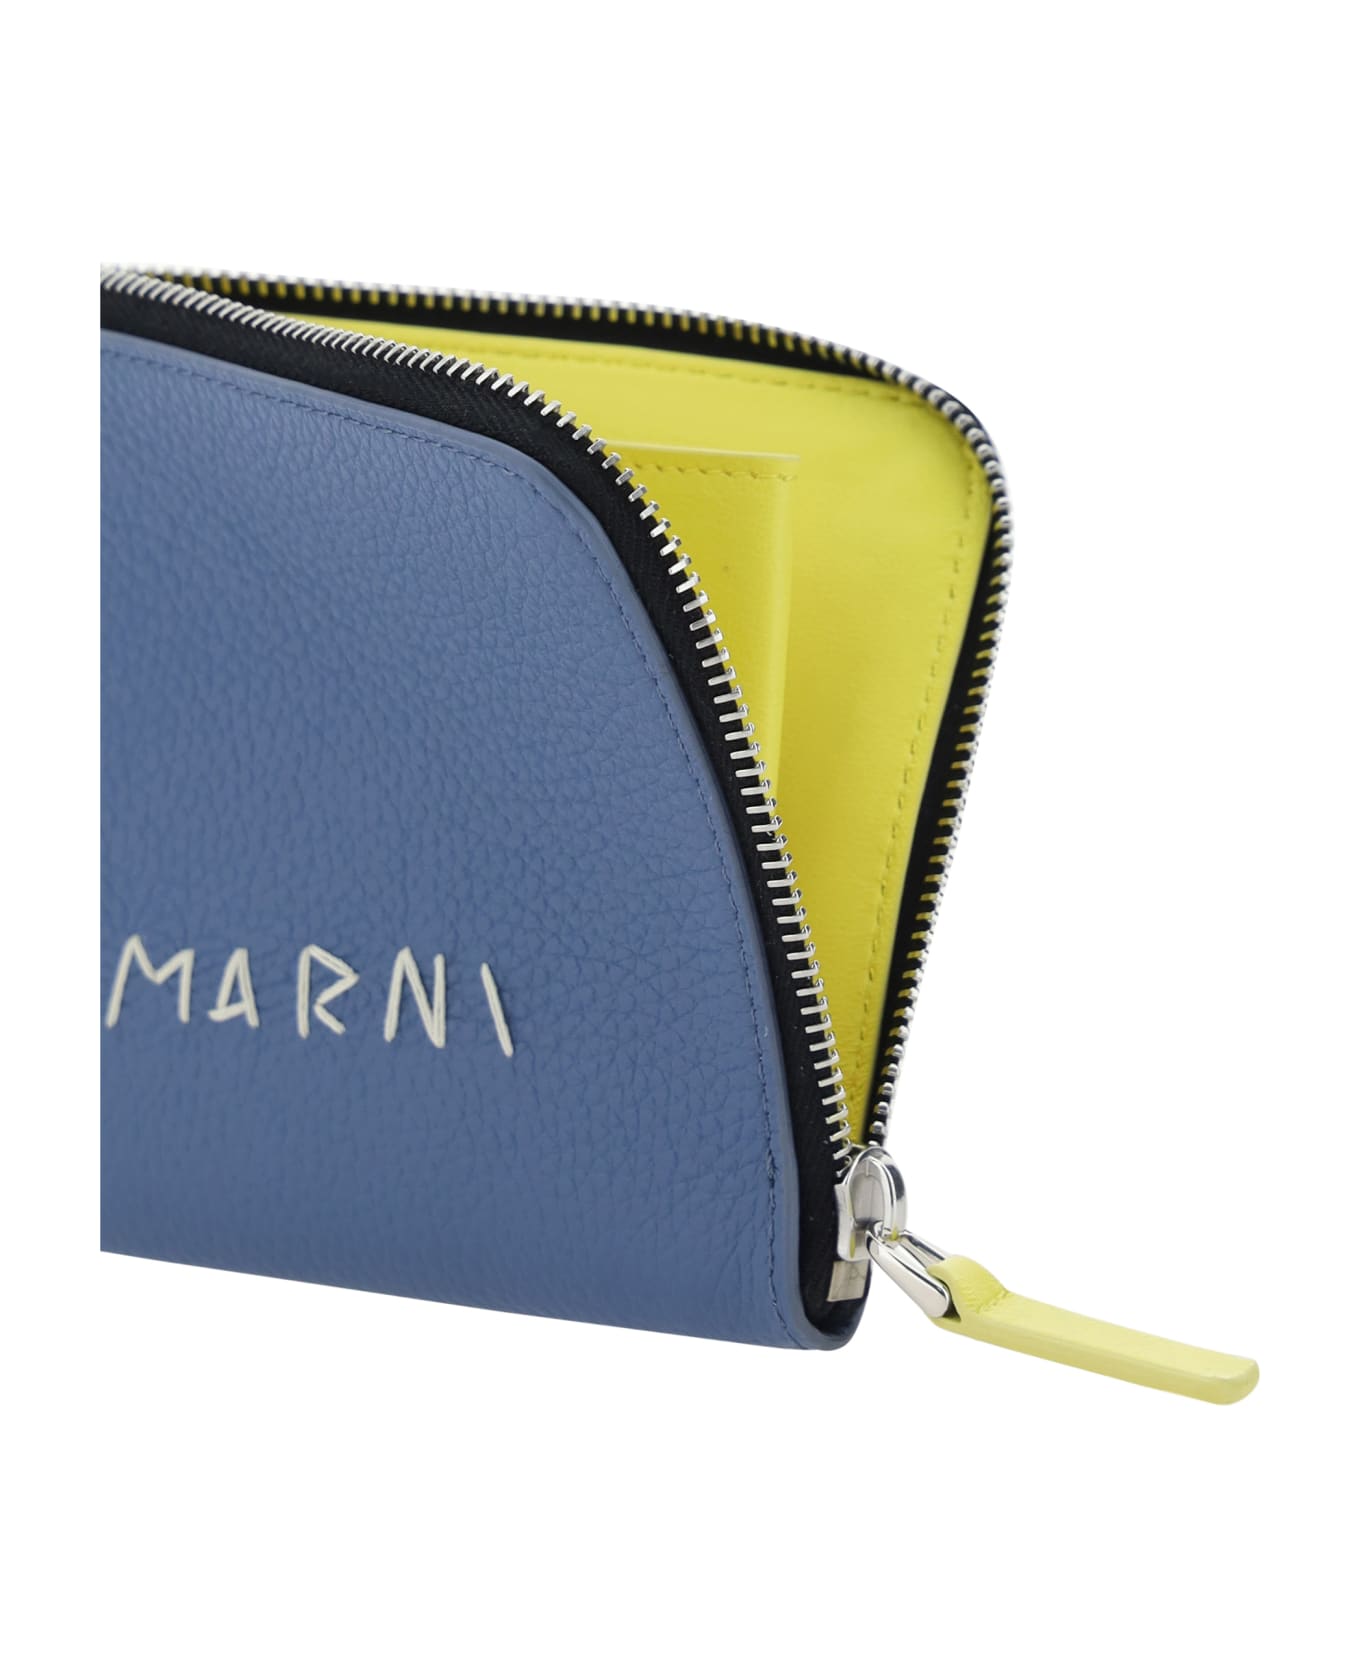 Marni Wallet - Gnawed Blue